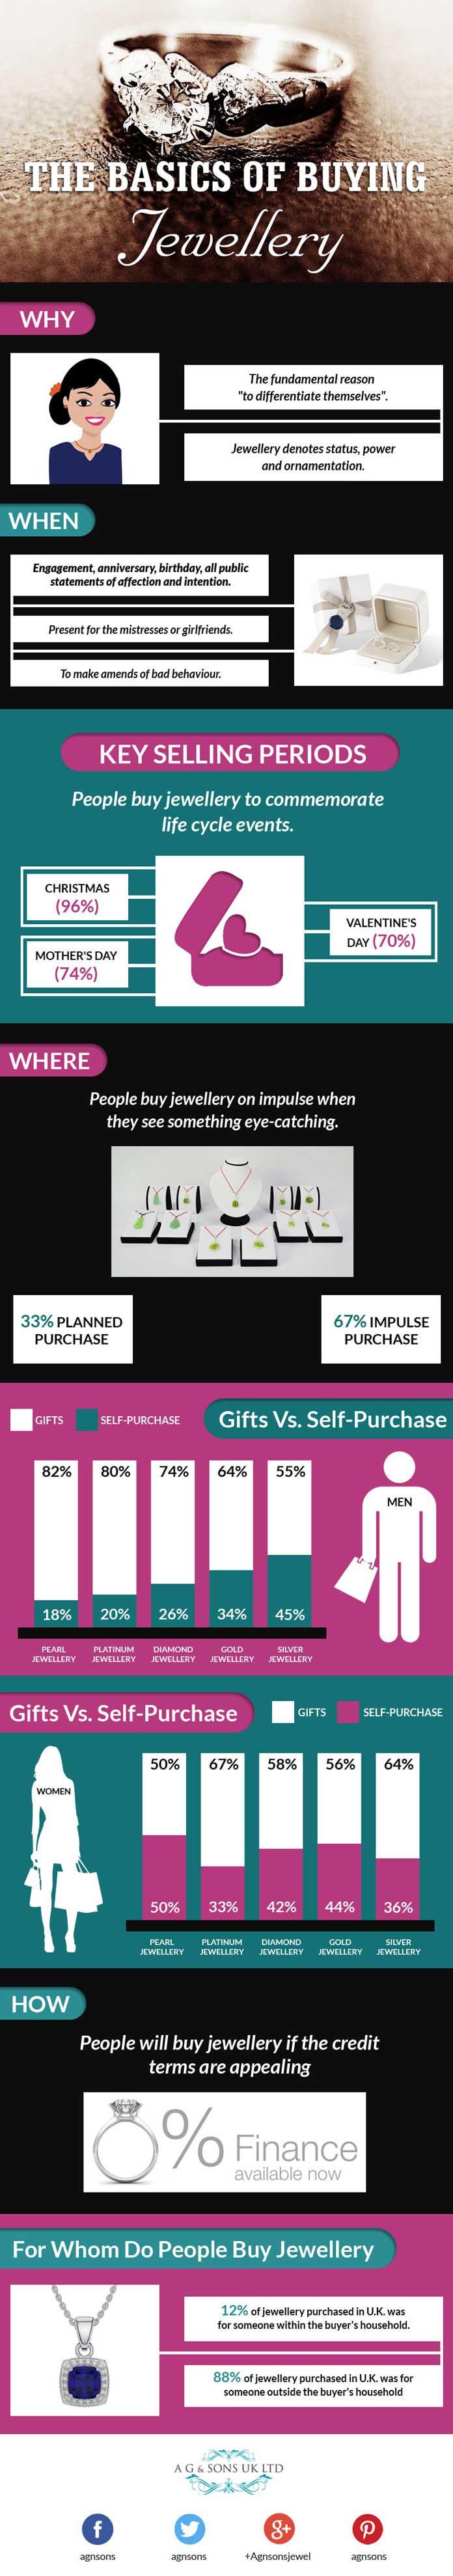 The Basics of Buying Jewellery